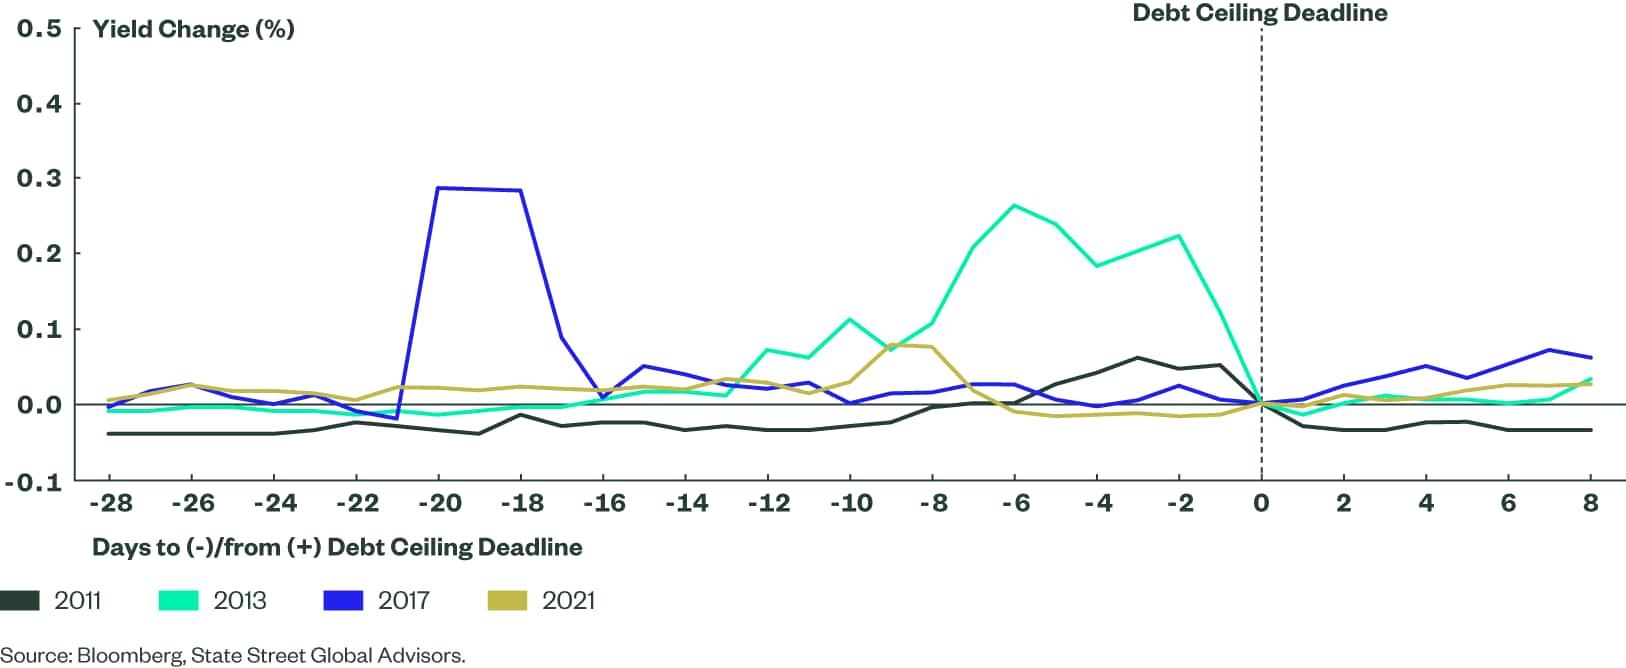 Figure 2: Change in 1-Month Treasury Bond Yields Around Debt Ceiling Deadline